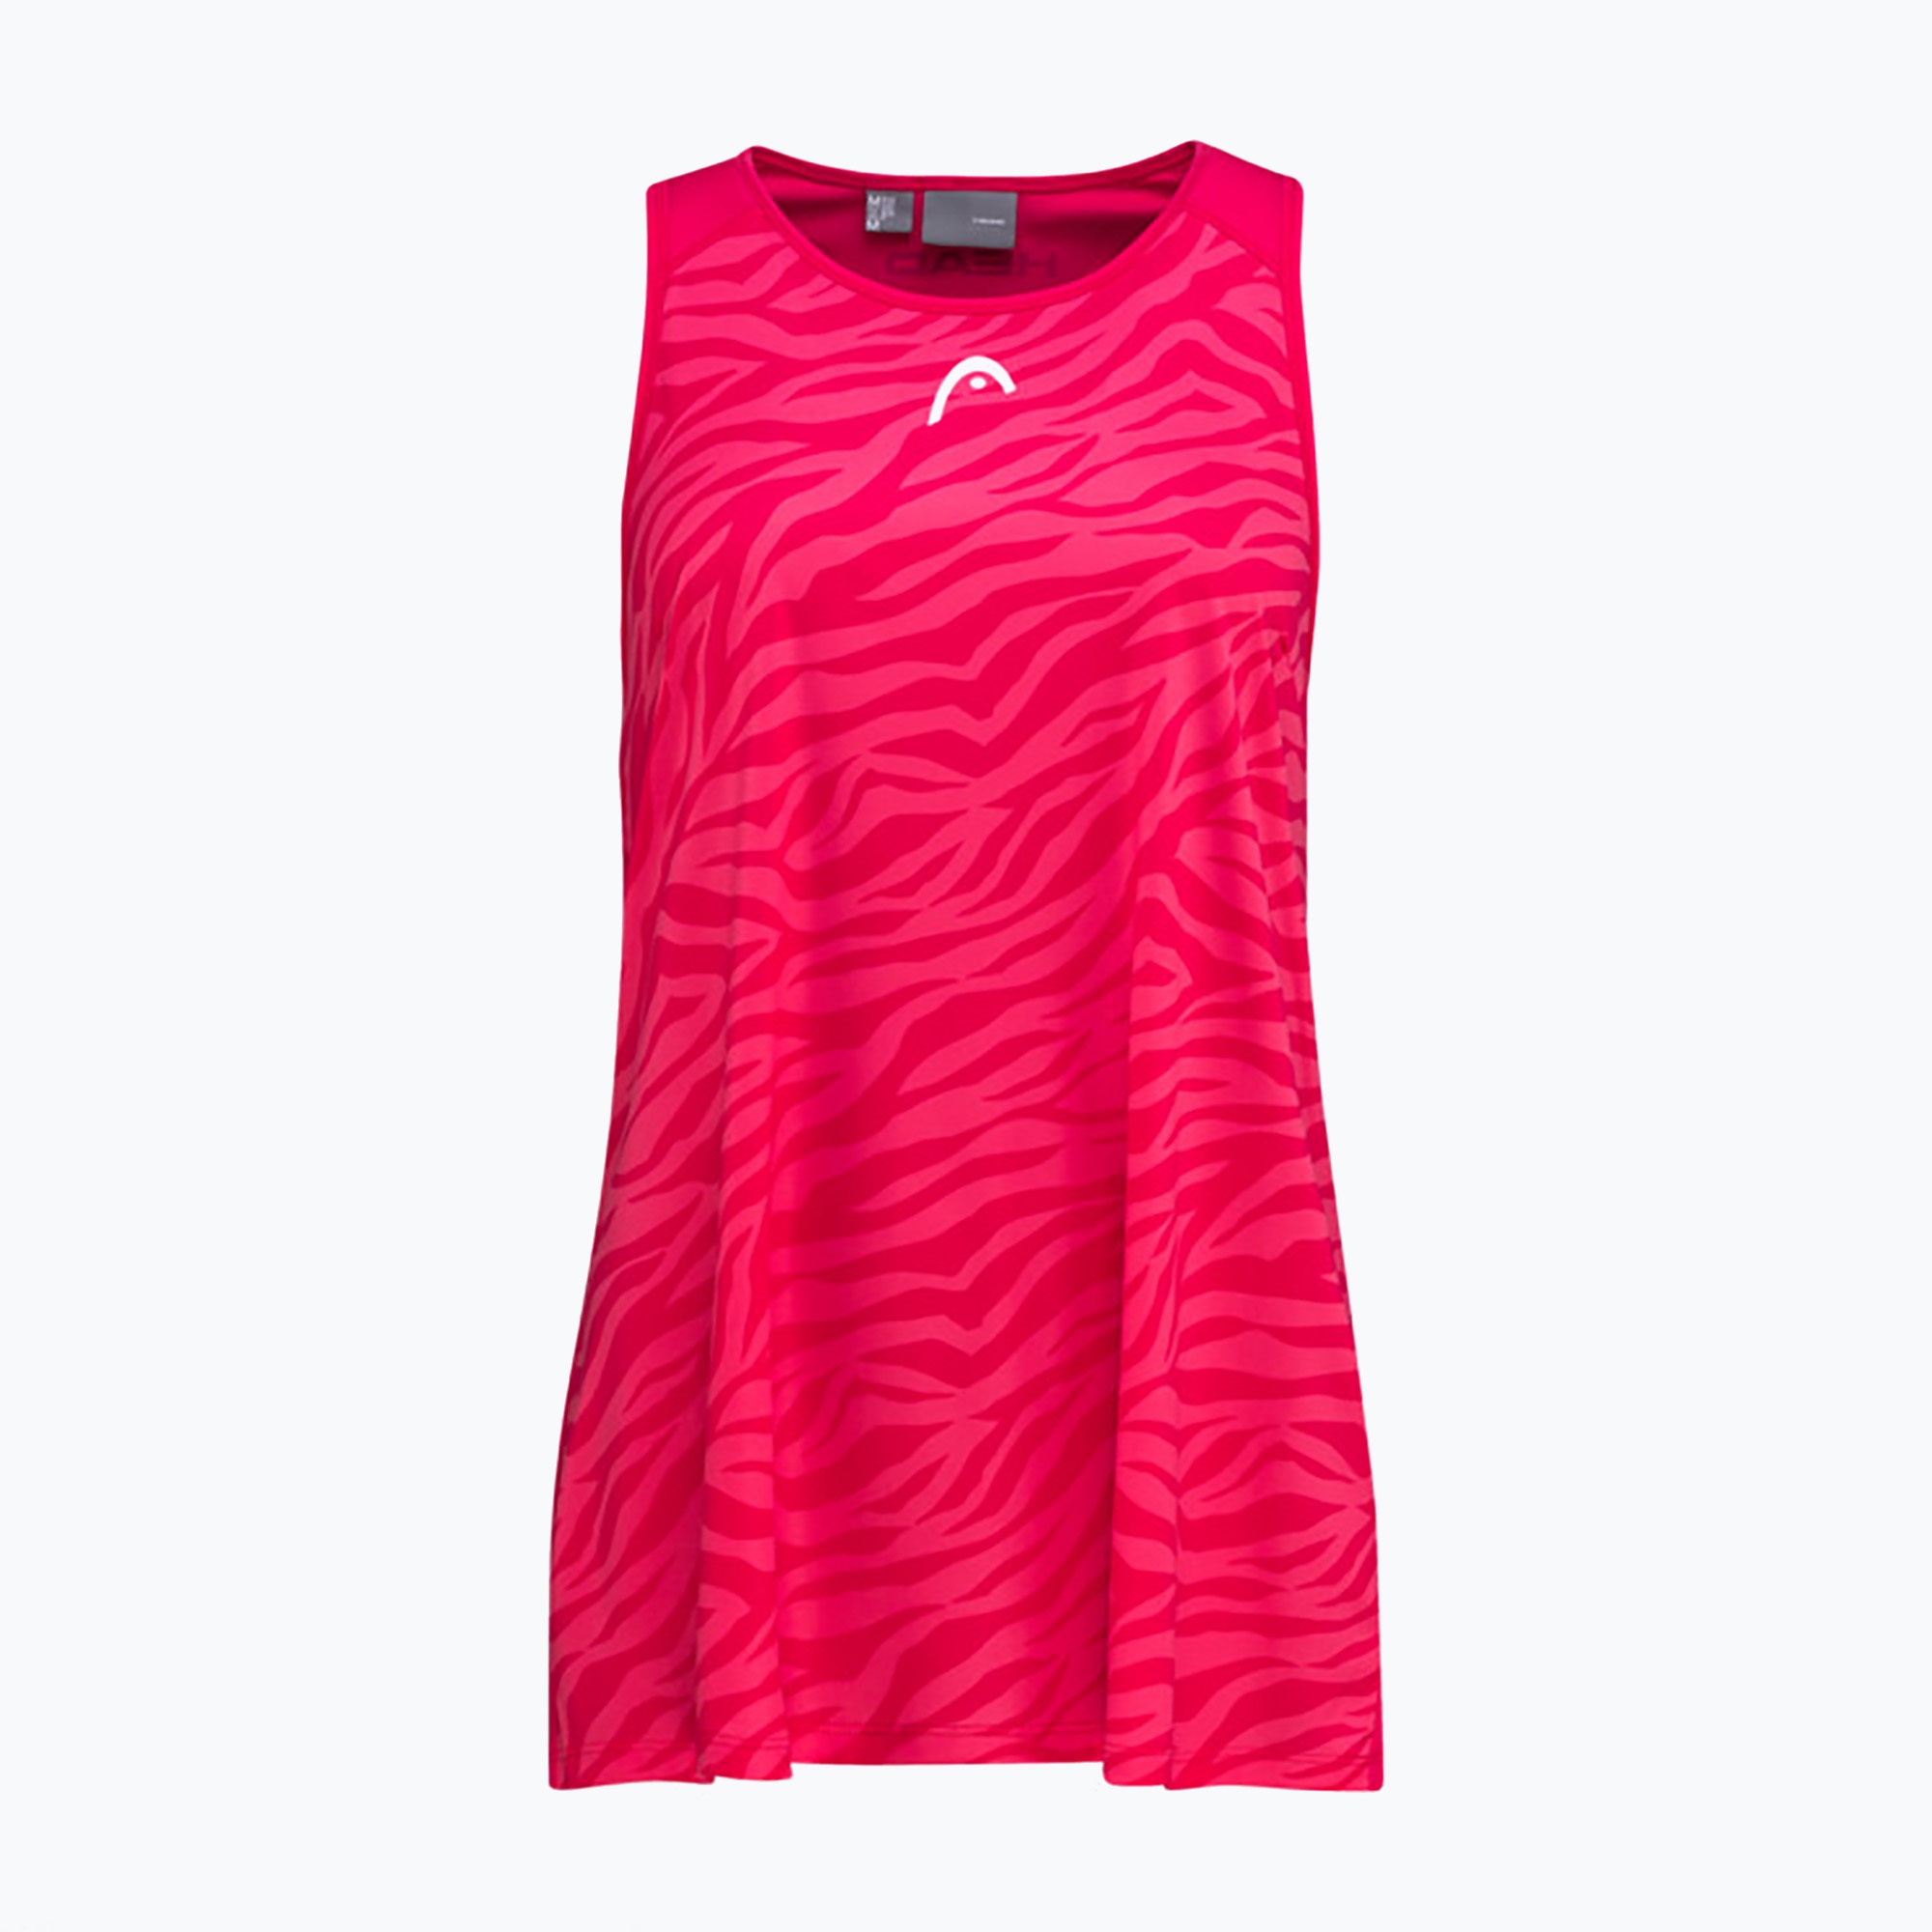 HEAD dámske tenisové tričko Agility pink 814532